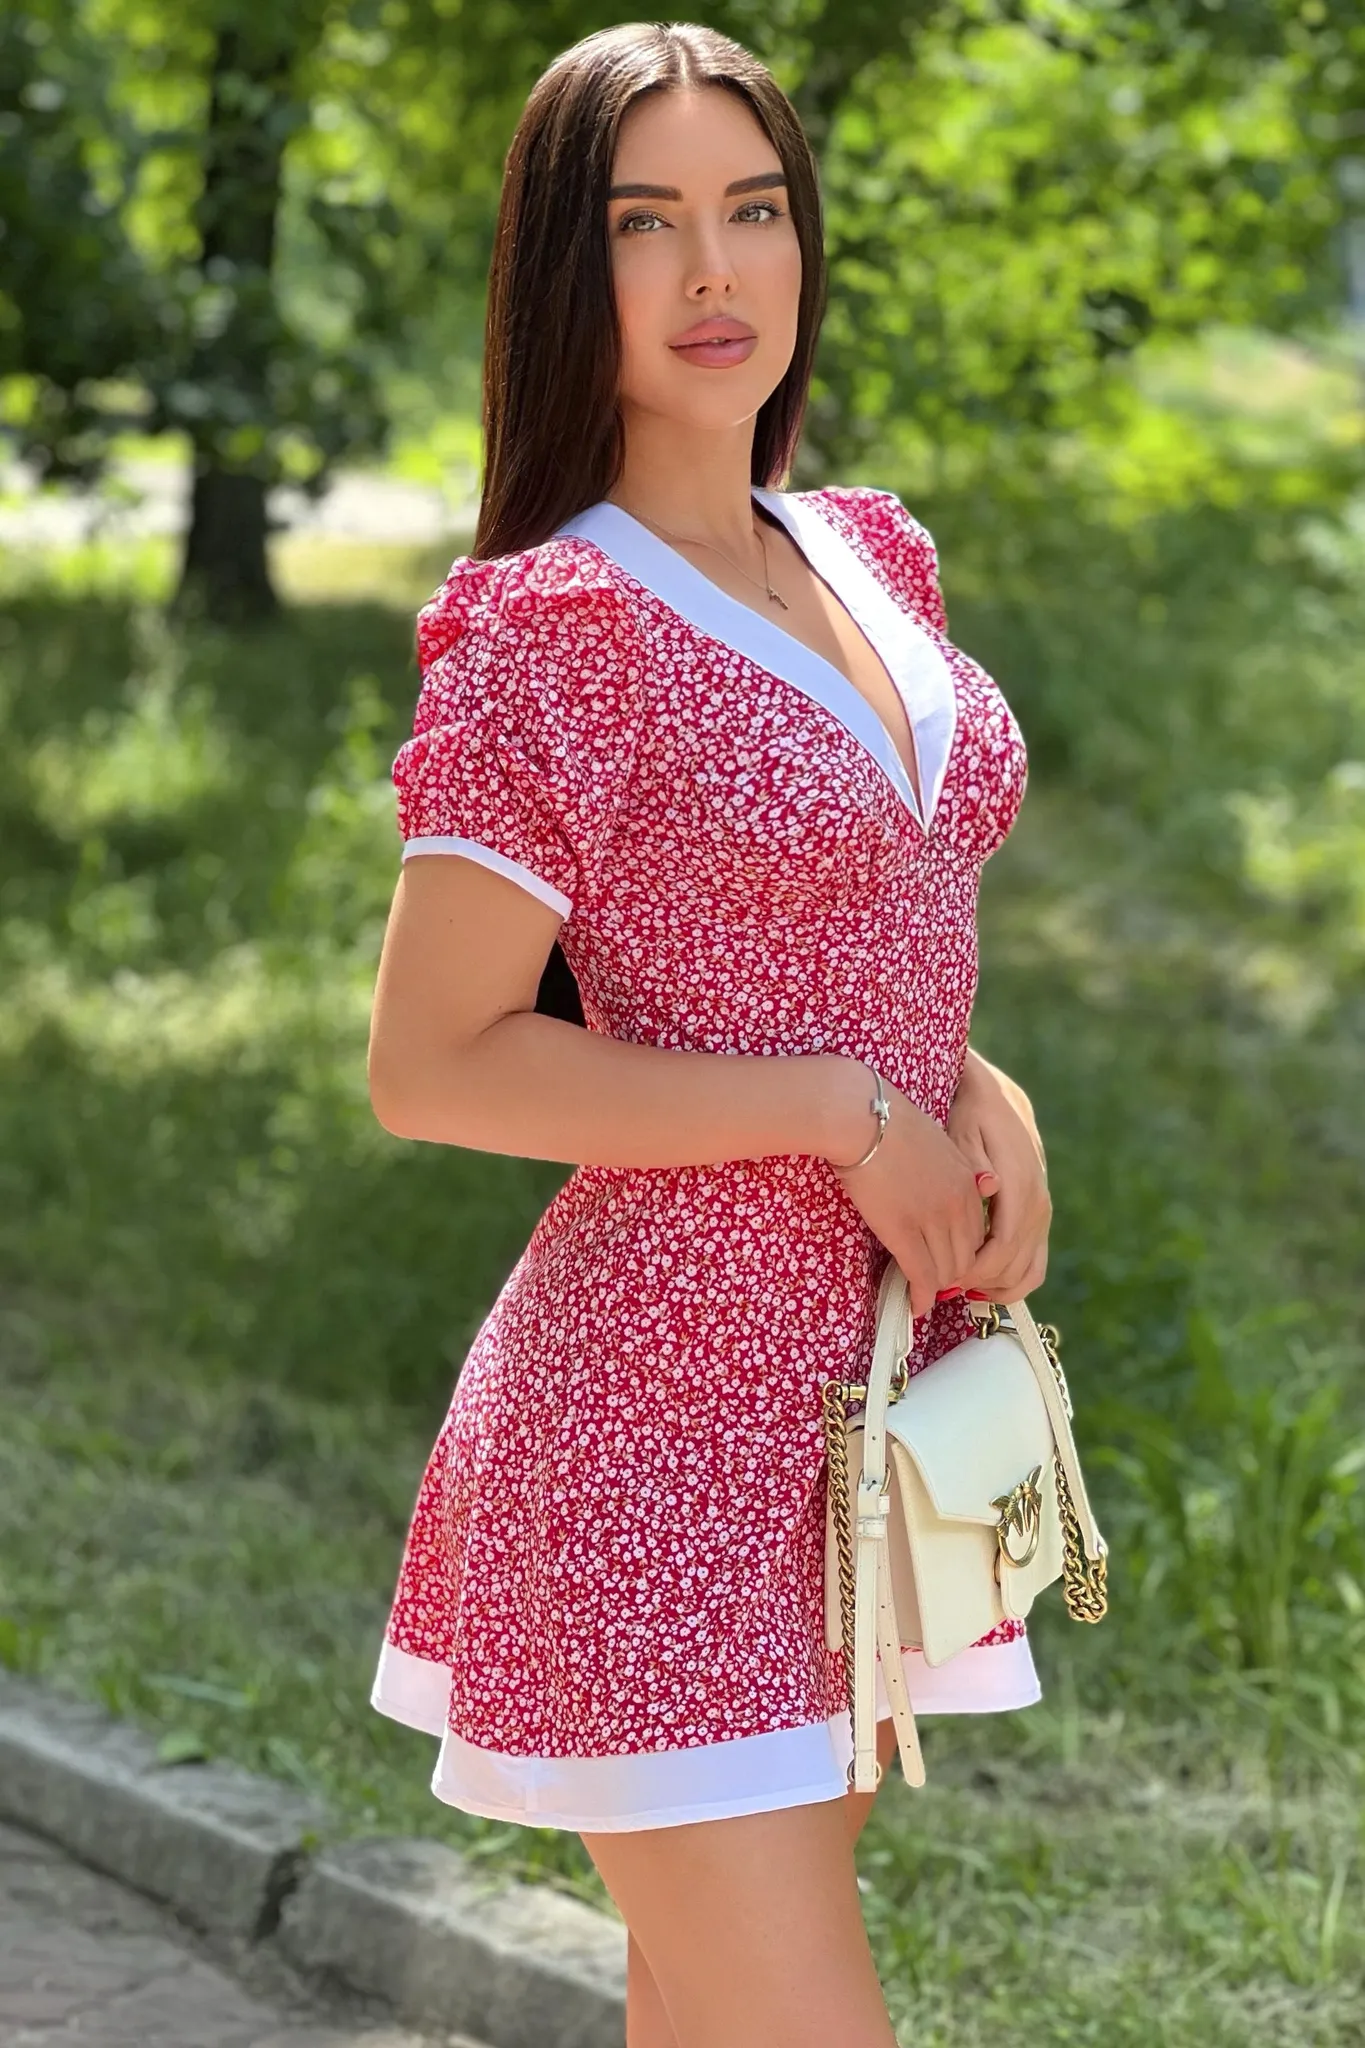 Kate ukrainian brides uk